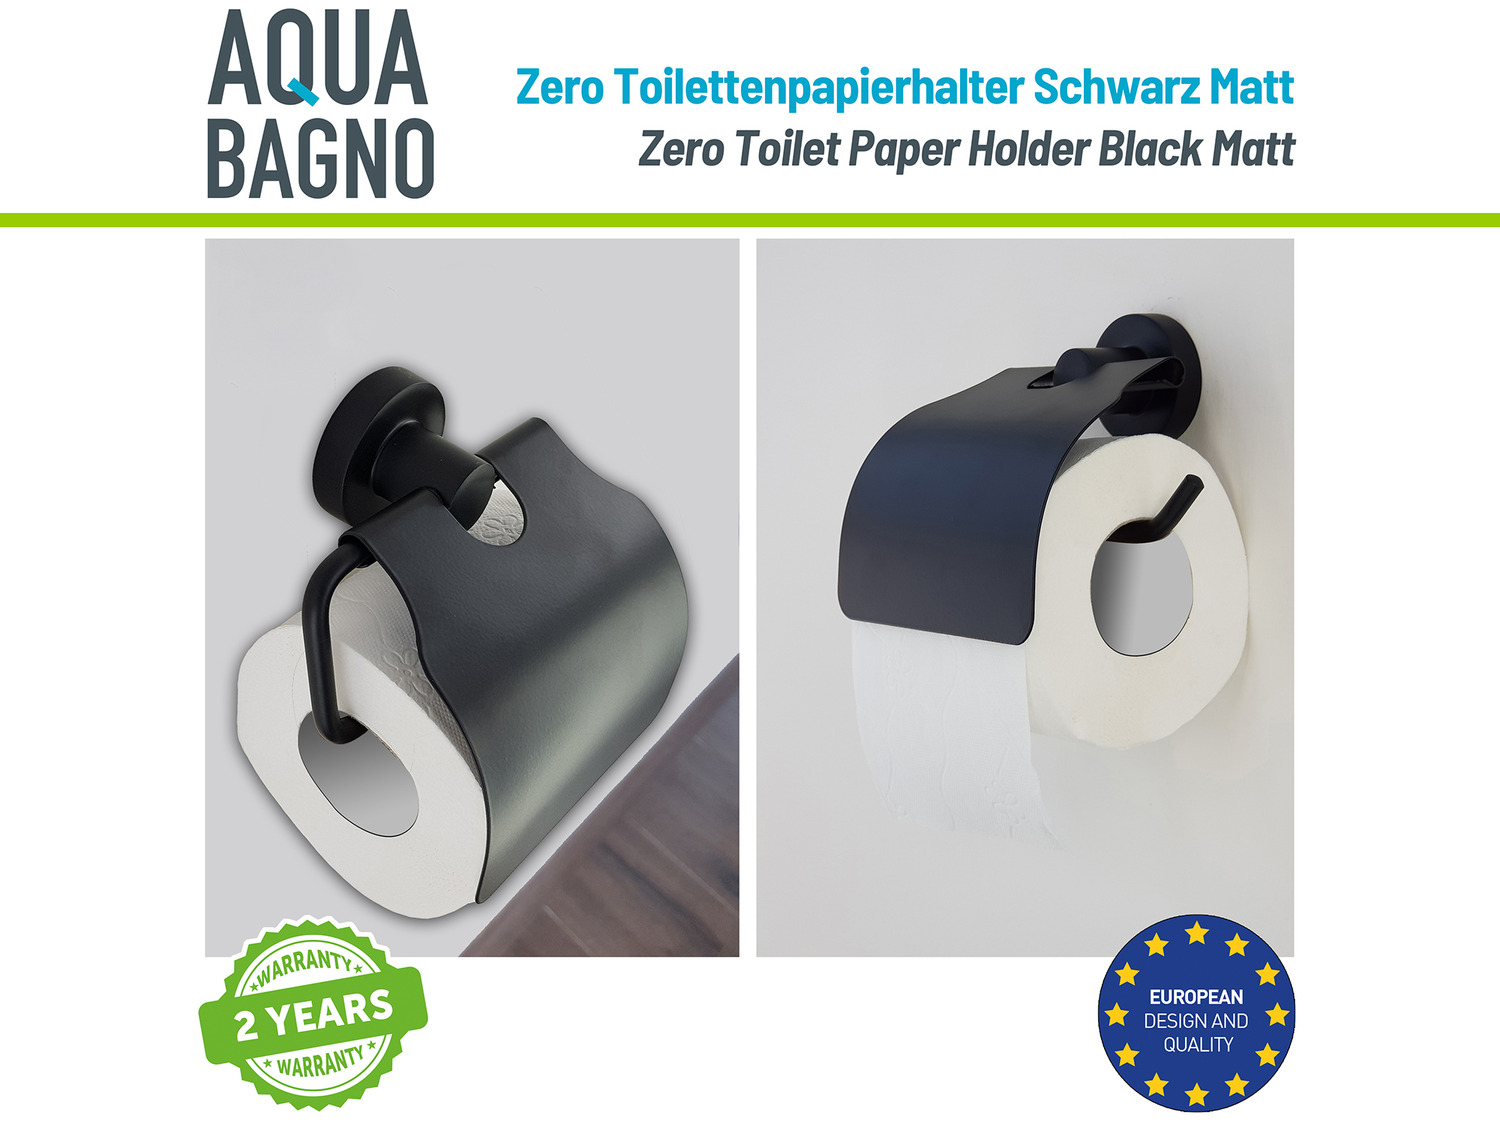 Aqua Bagno ZERO Pap matt Abdeckung - schwarz Toilettenpapierhalter mit